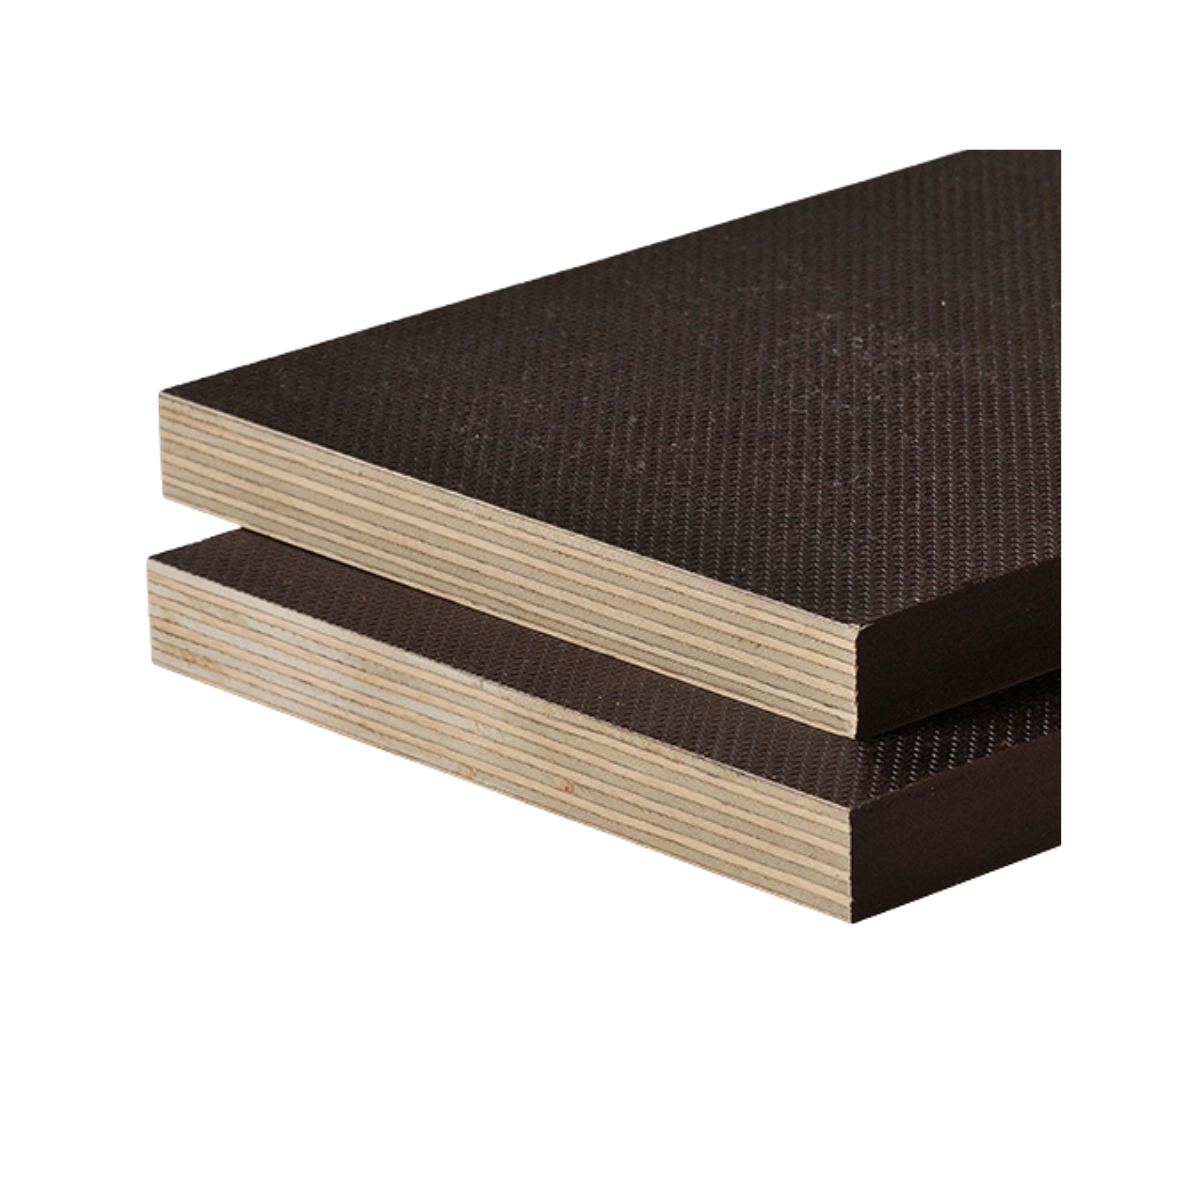 Antiskid playwood - Anti-slip TEGO formwork plywood 9 mm thickness, 1250 x 2500 mm class AB, https:maxbau.ro